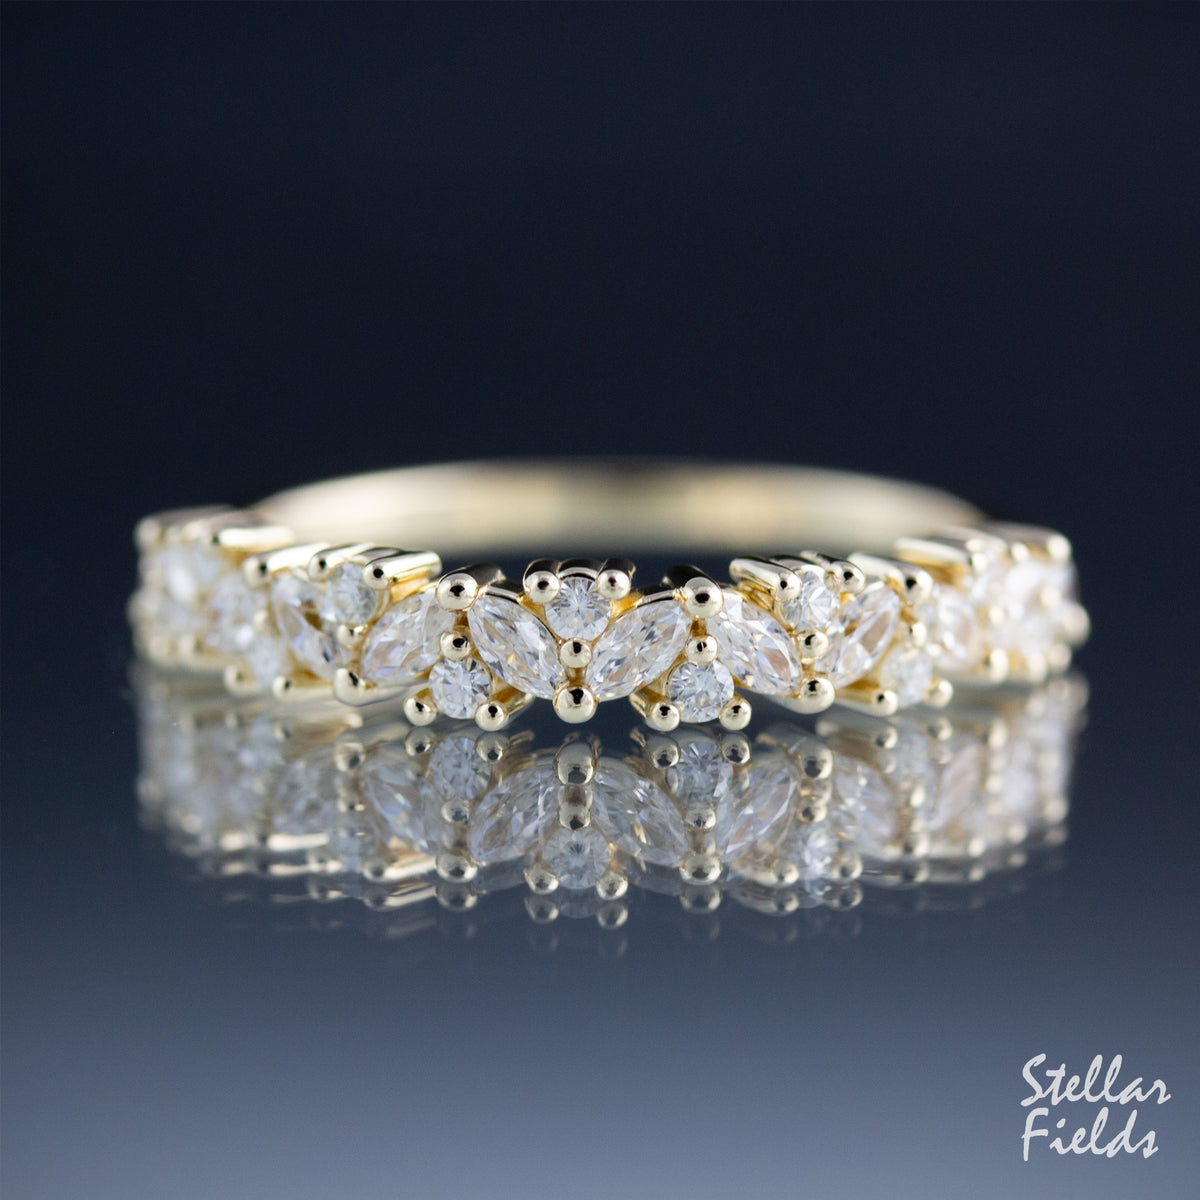 Diamond Cluster Wedding Ring Floral Wedding Band 14k Yellow Gold Stellar Fields Jewelry